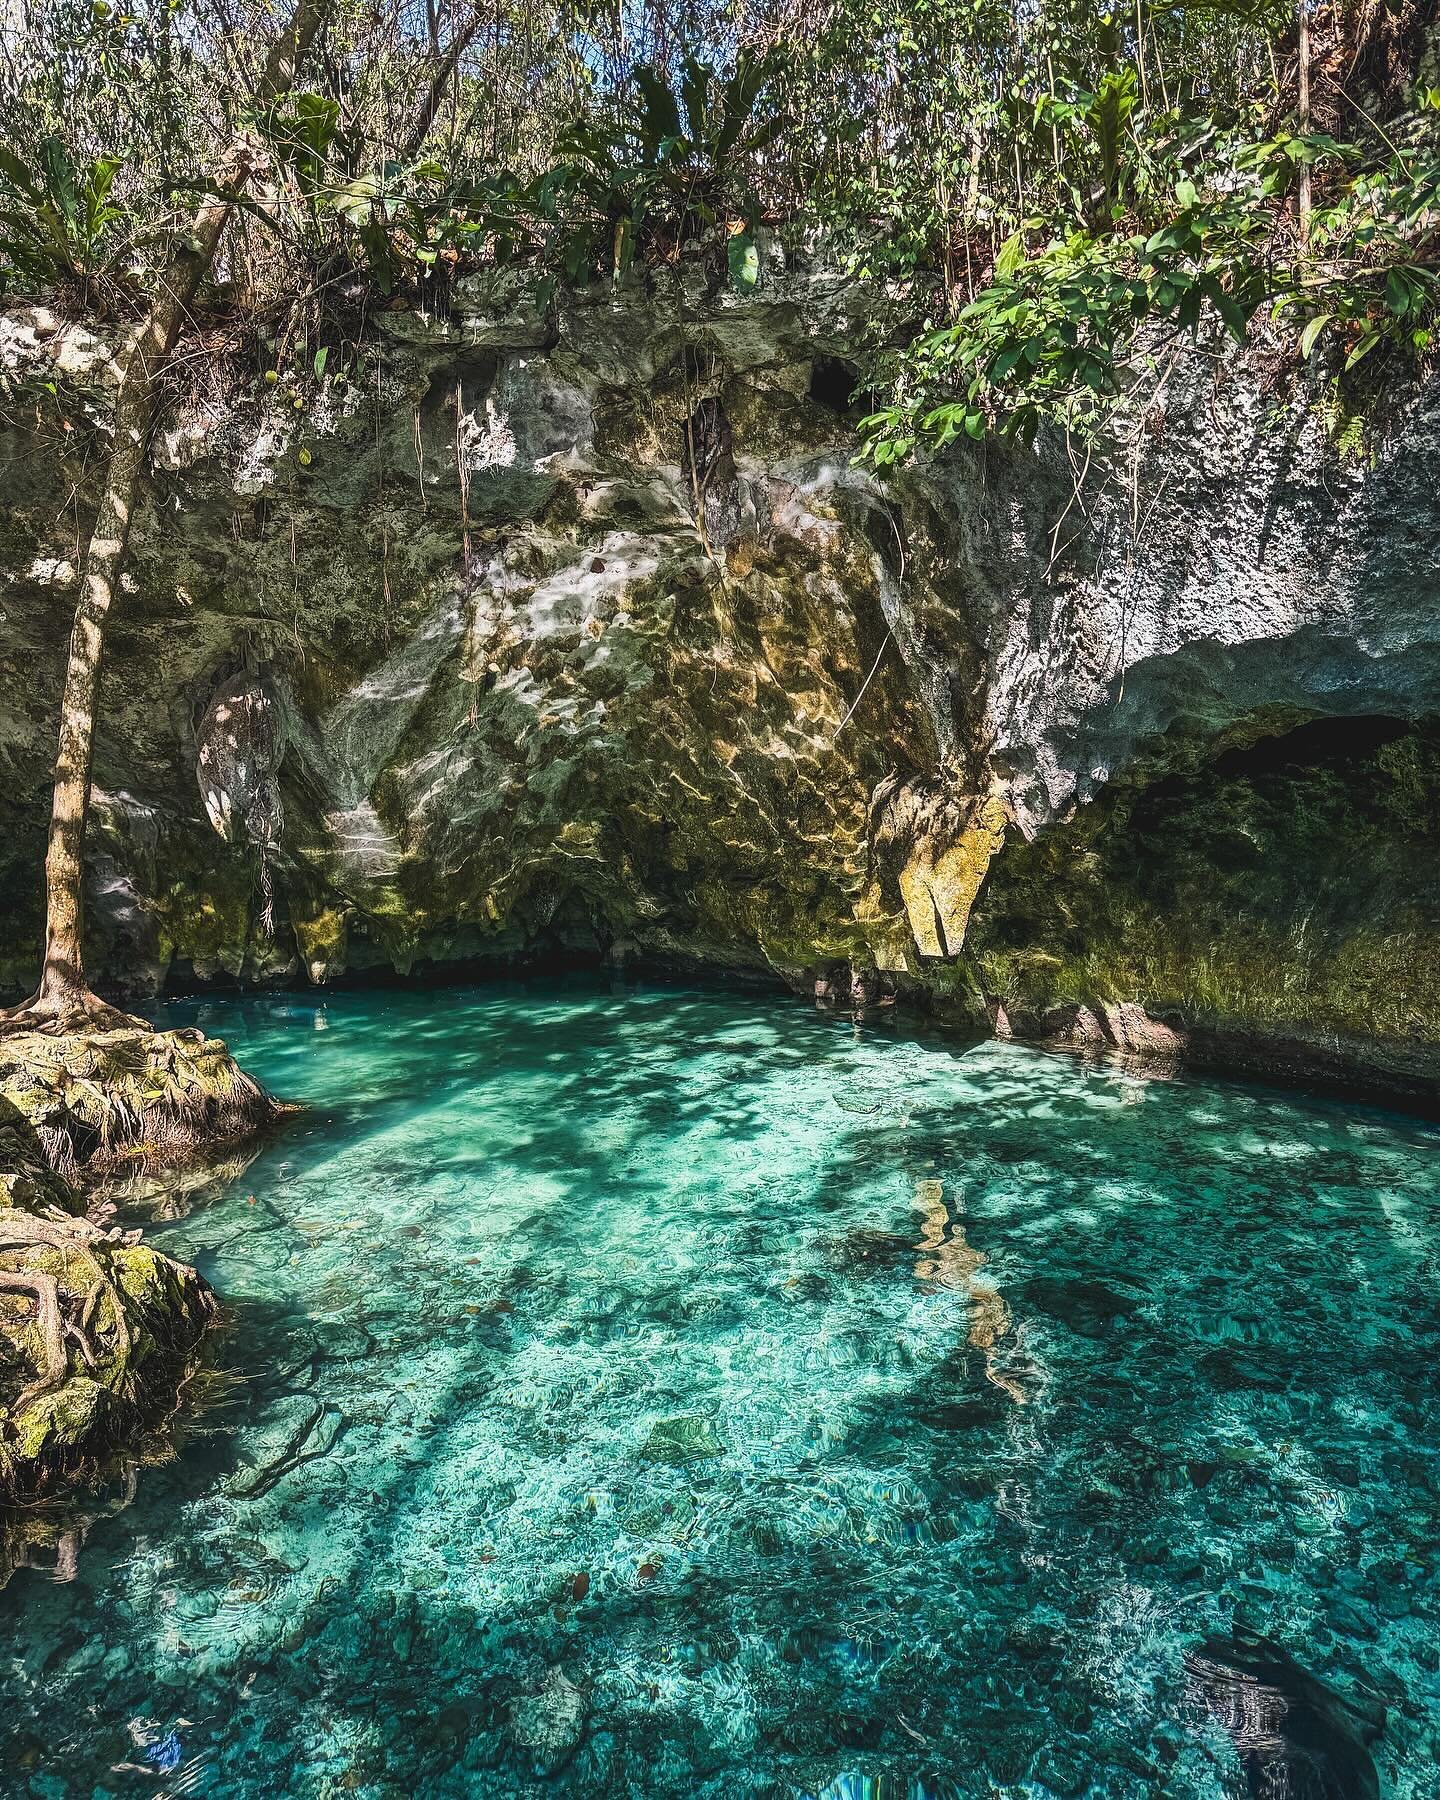 Cenotes in the Riviera Maya region

#shotoniphone #tulummexico